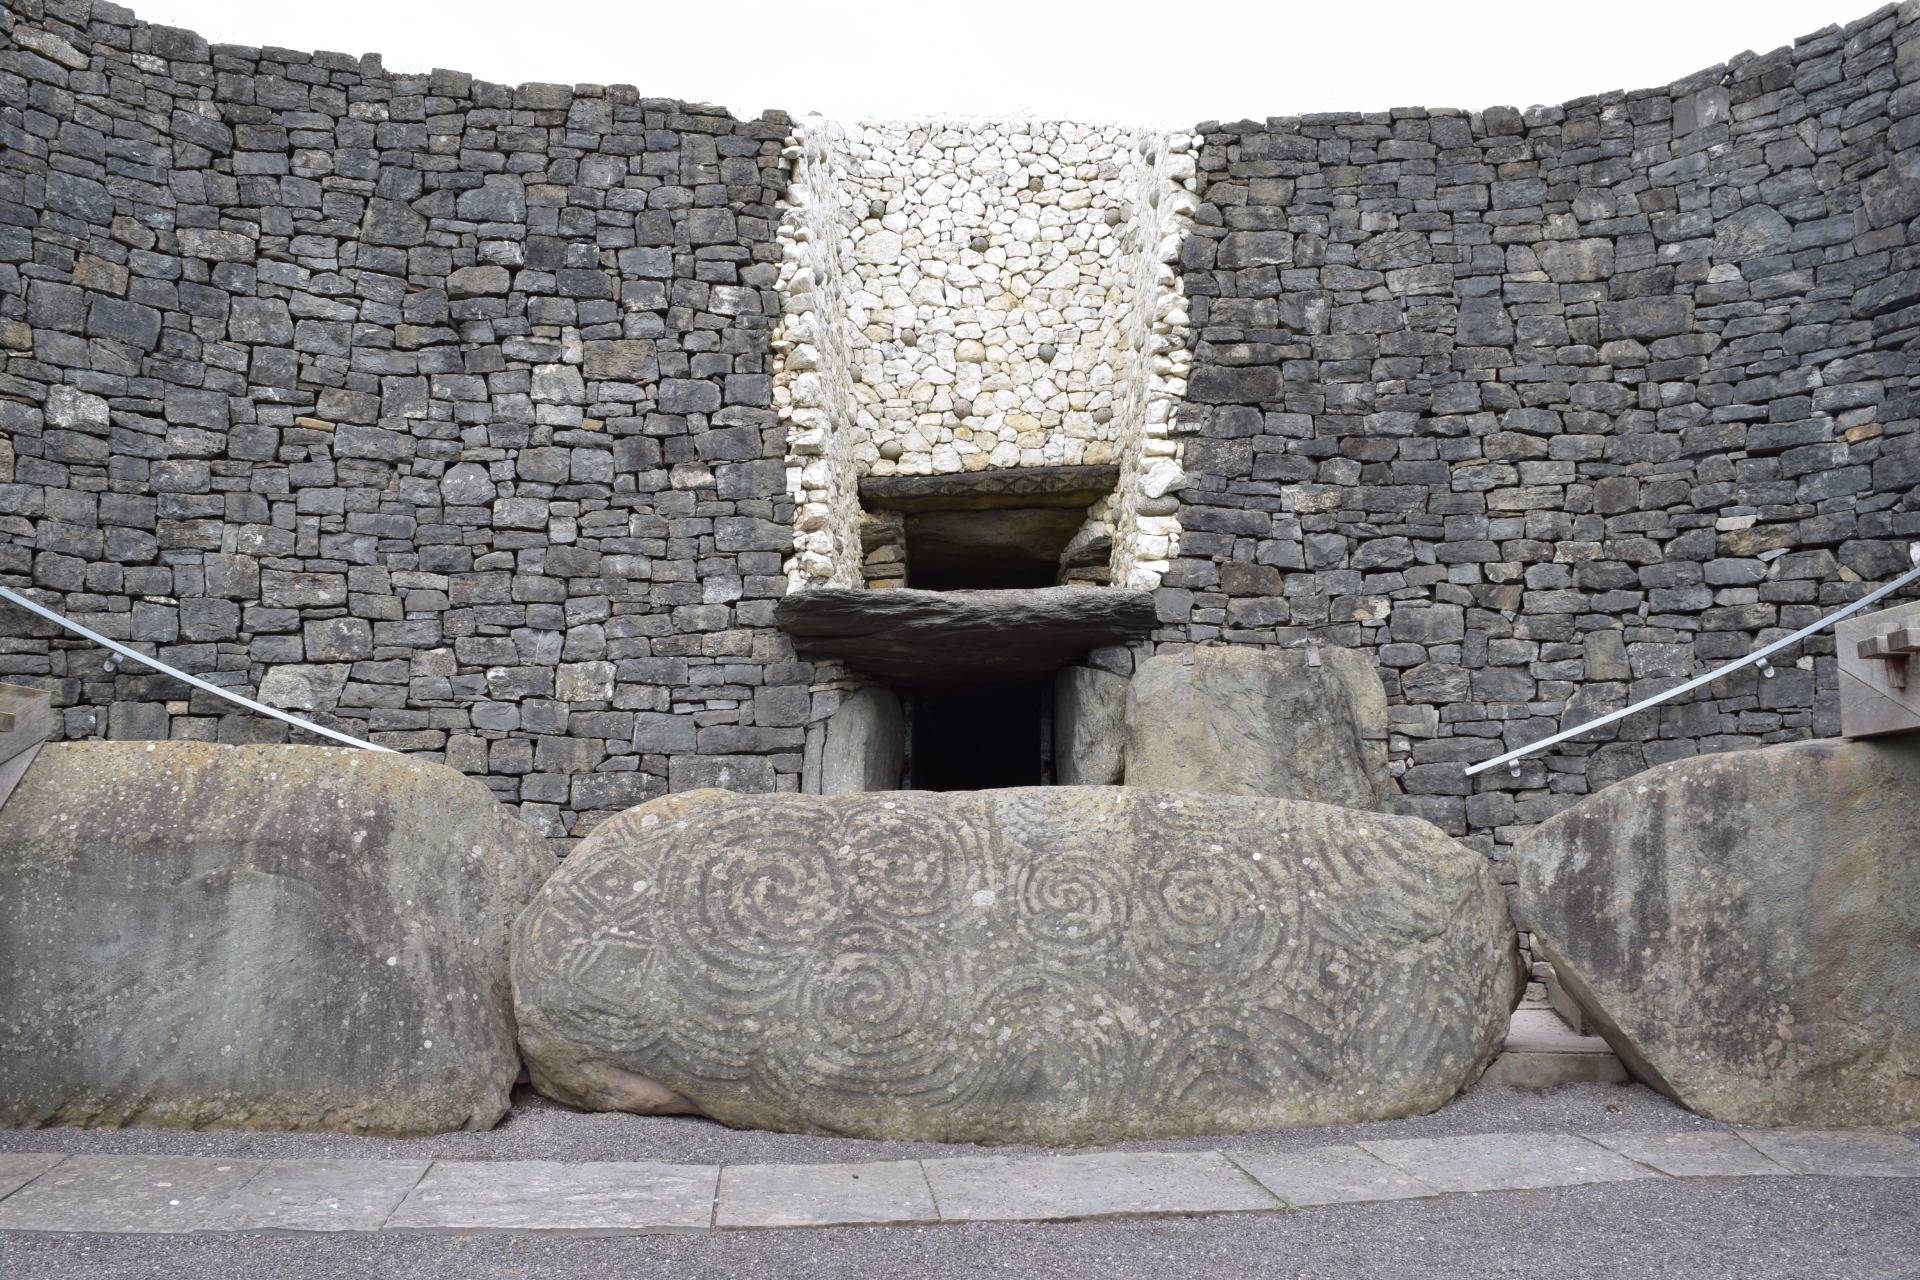 A closer look at the entrance of Newgrange